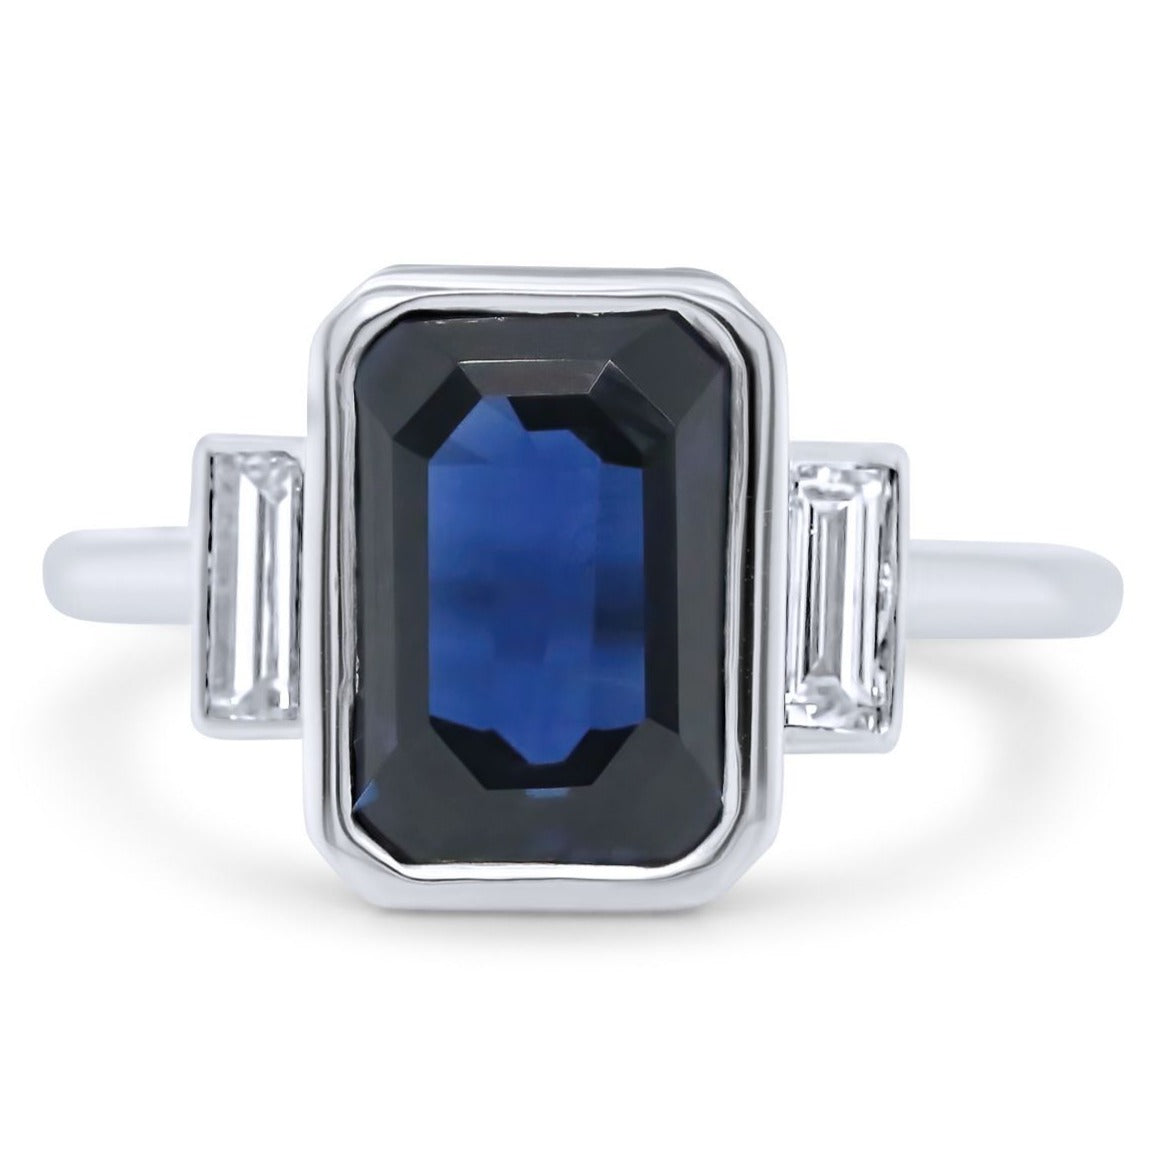 14k white gold blue emerald cut sapphire with diamond baguette side stones